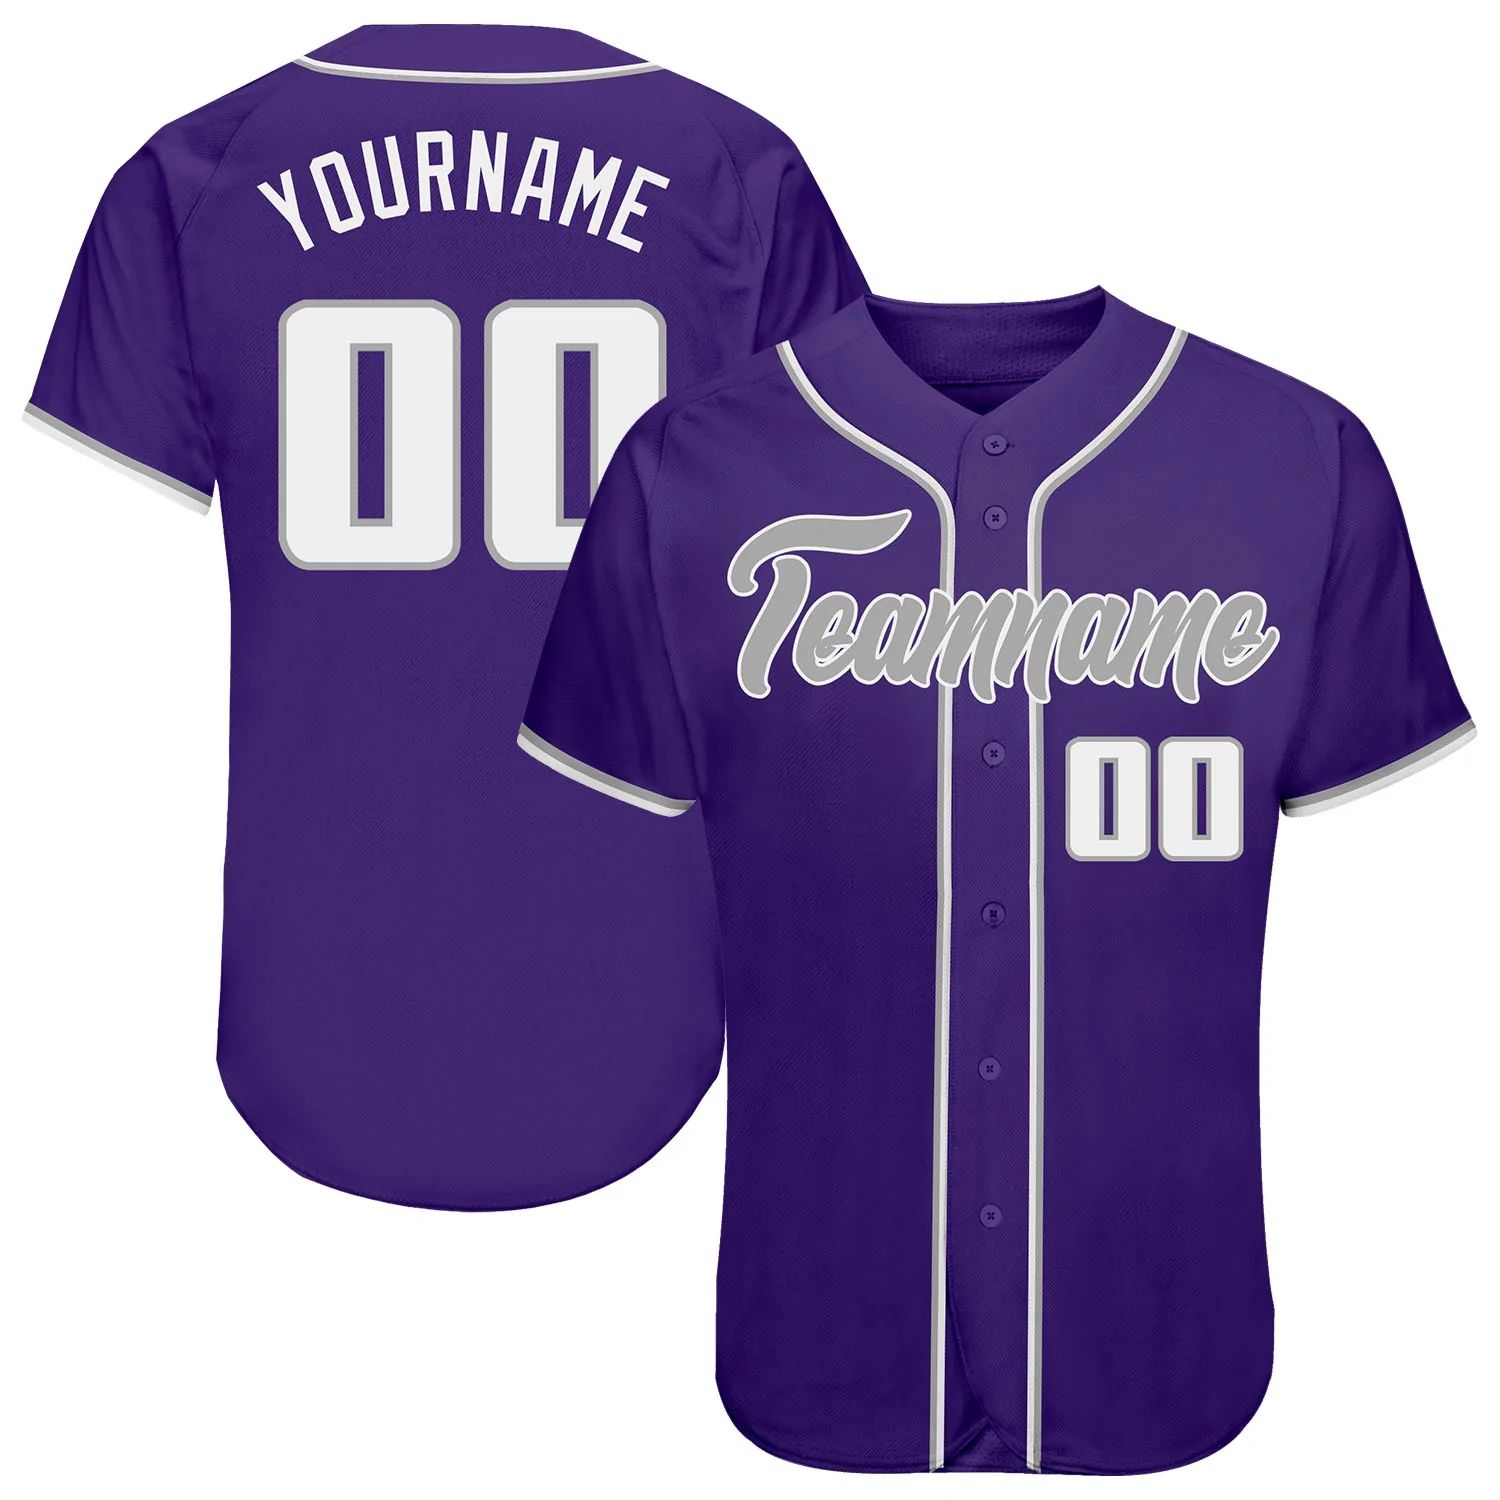 build-gray-purple-baseball-white-jersey-authentic-purple0083-online-1.jpg